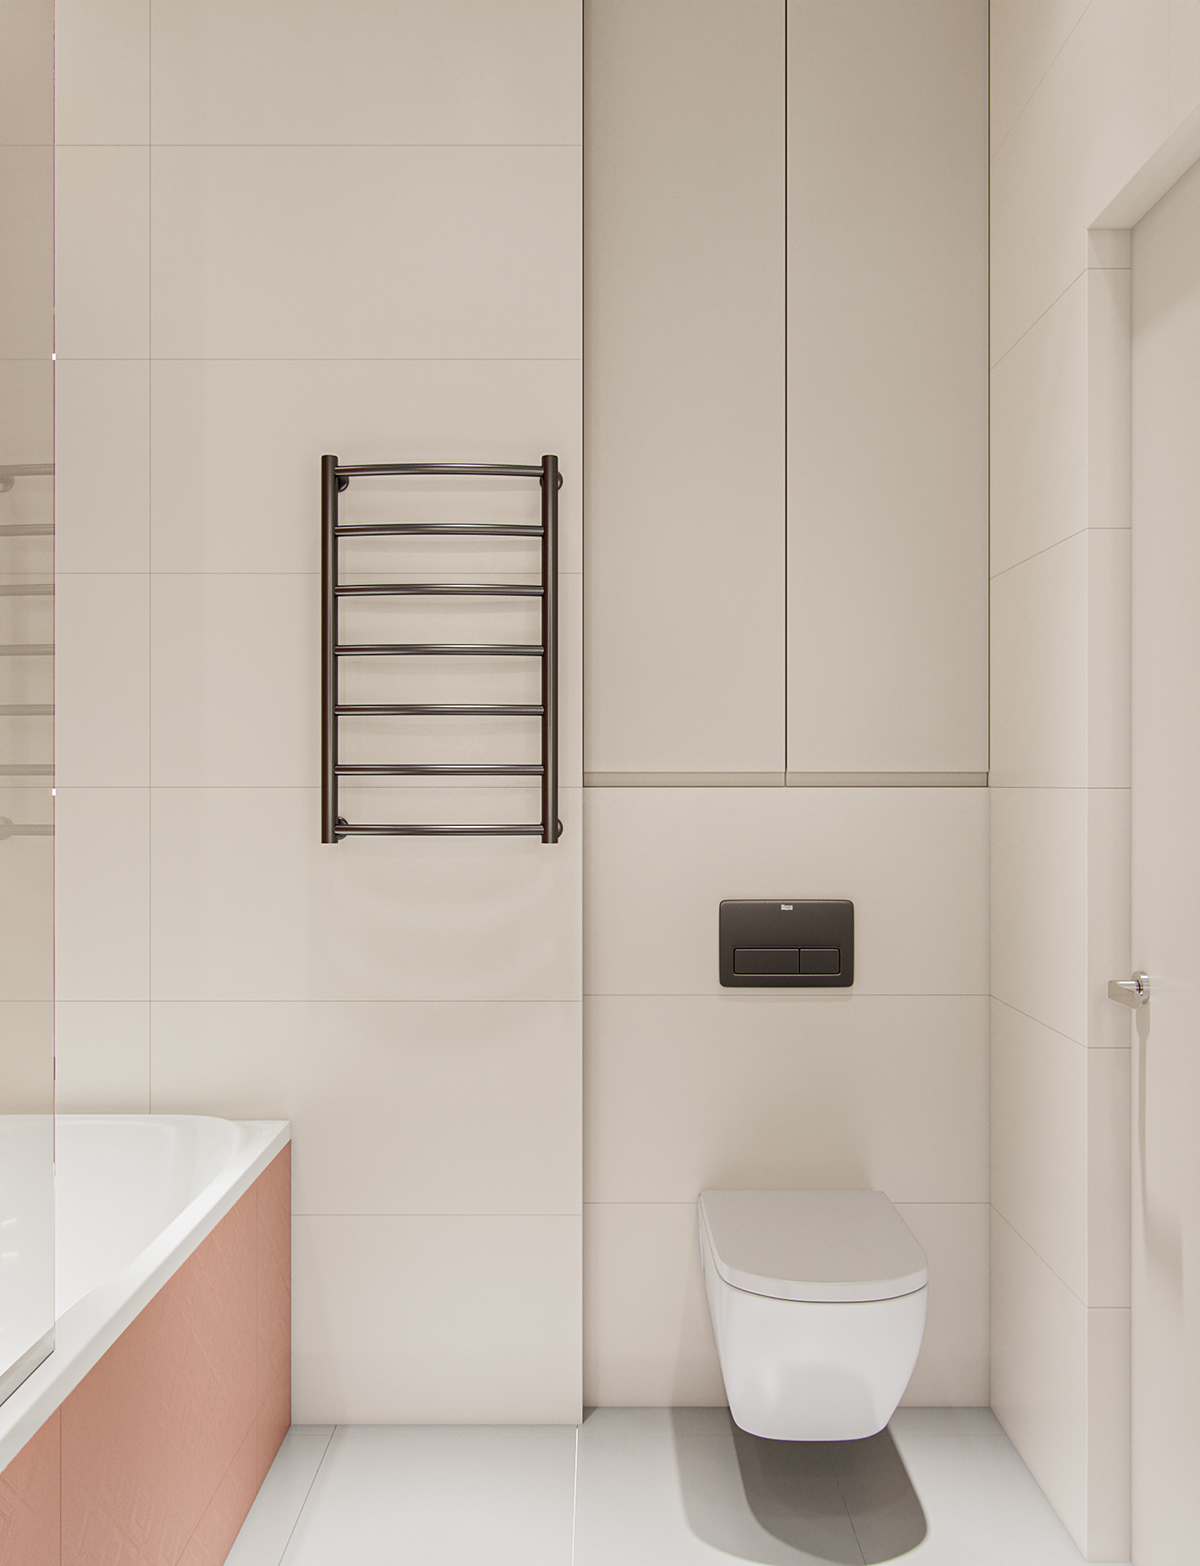 interior design  3ds max visualization Render corona archviz 3D modern minimalistic kitchen design